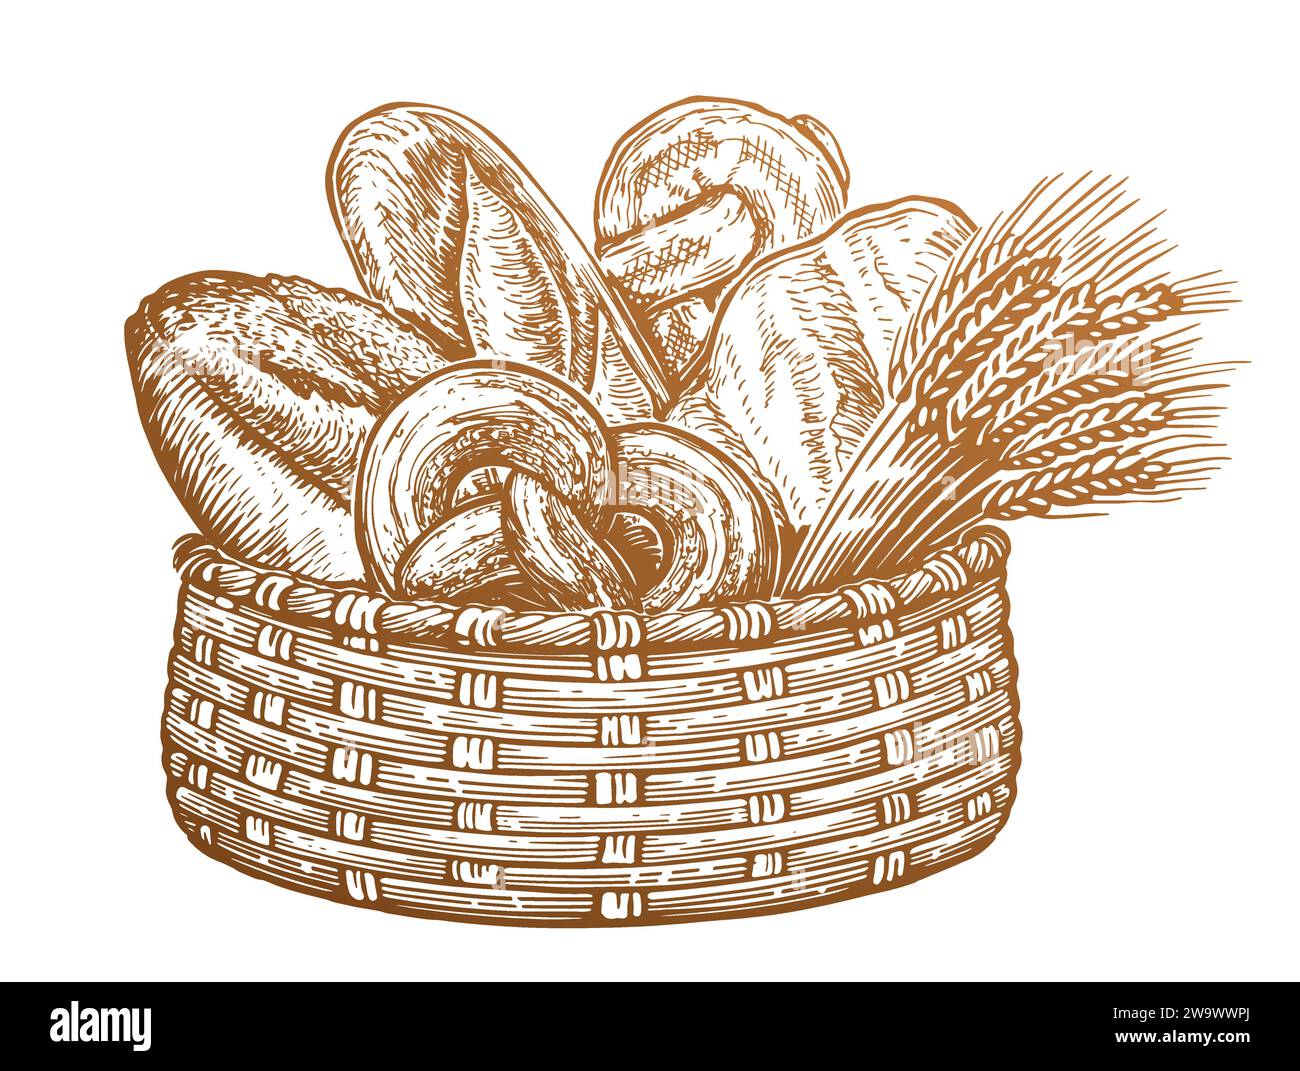 Verschiedene Brotsorten und Weizenohren im Korb. Frische Backwaren, Skizze Vintage Vektor Illustration Stock Vektor